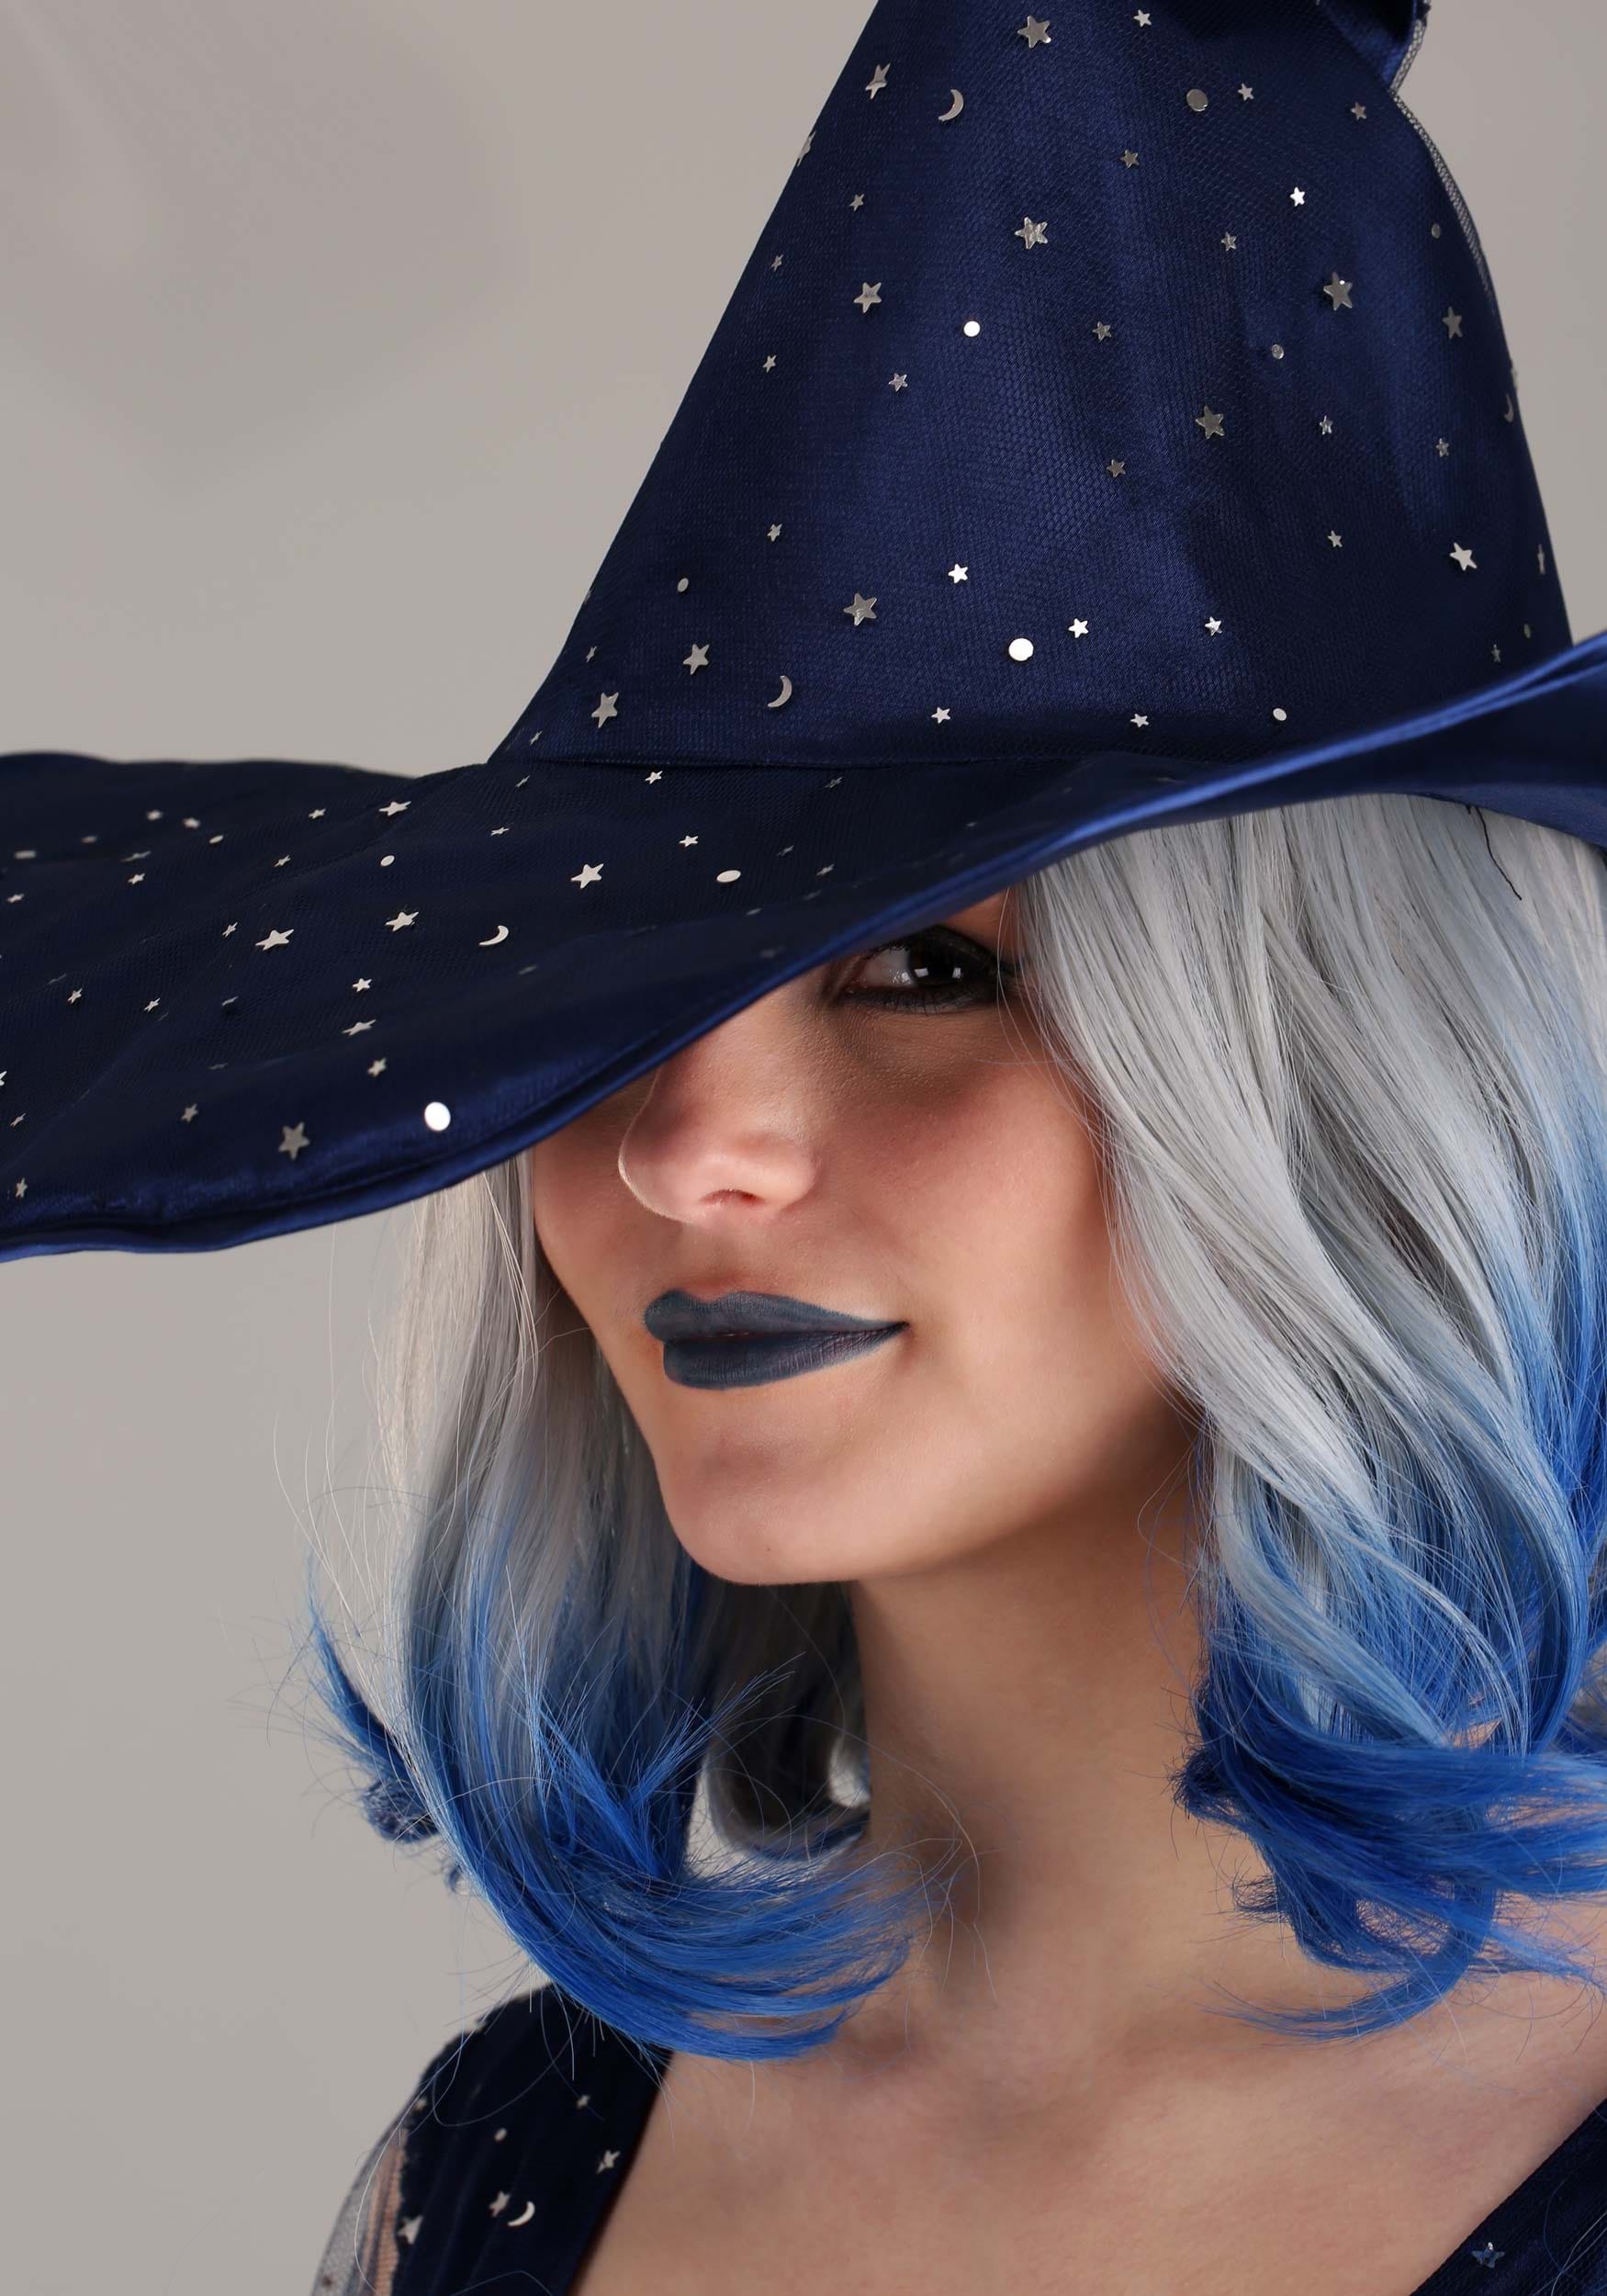 Moonbeam Witch Women's Costume